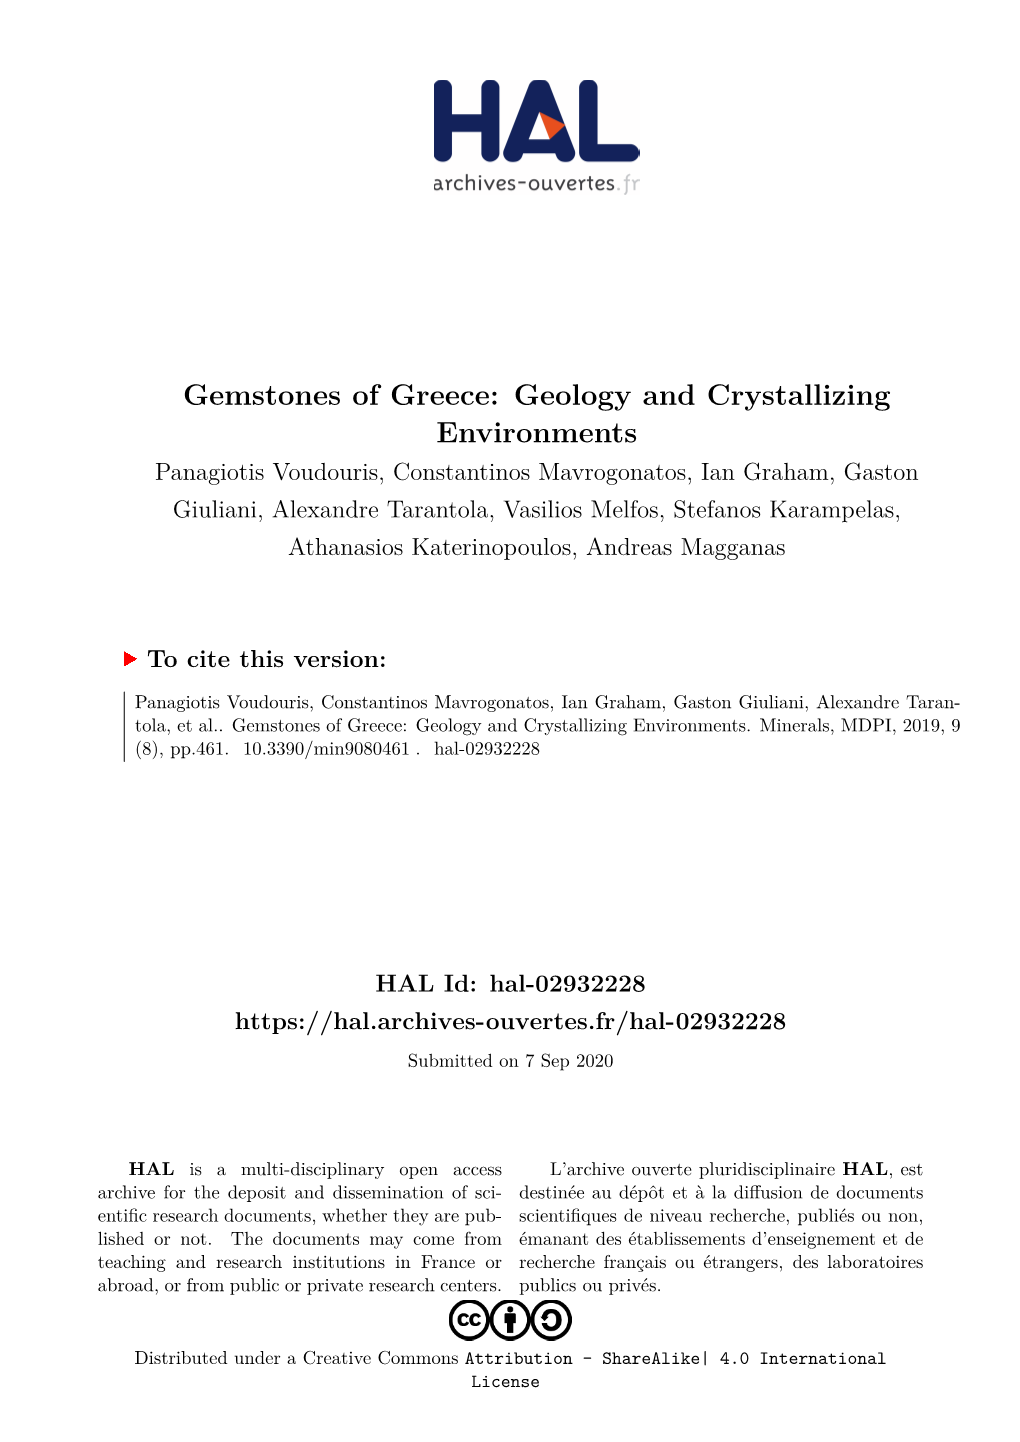 Gemstones of Greece: Geology and Crystallizing